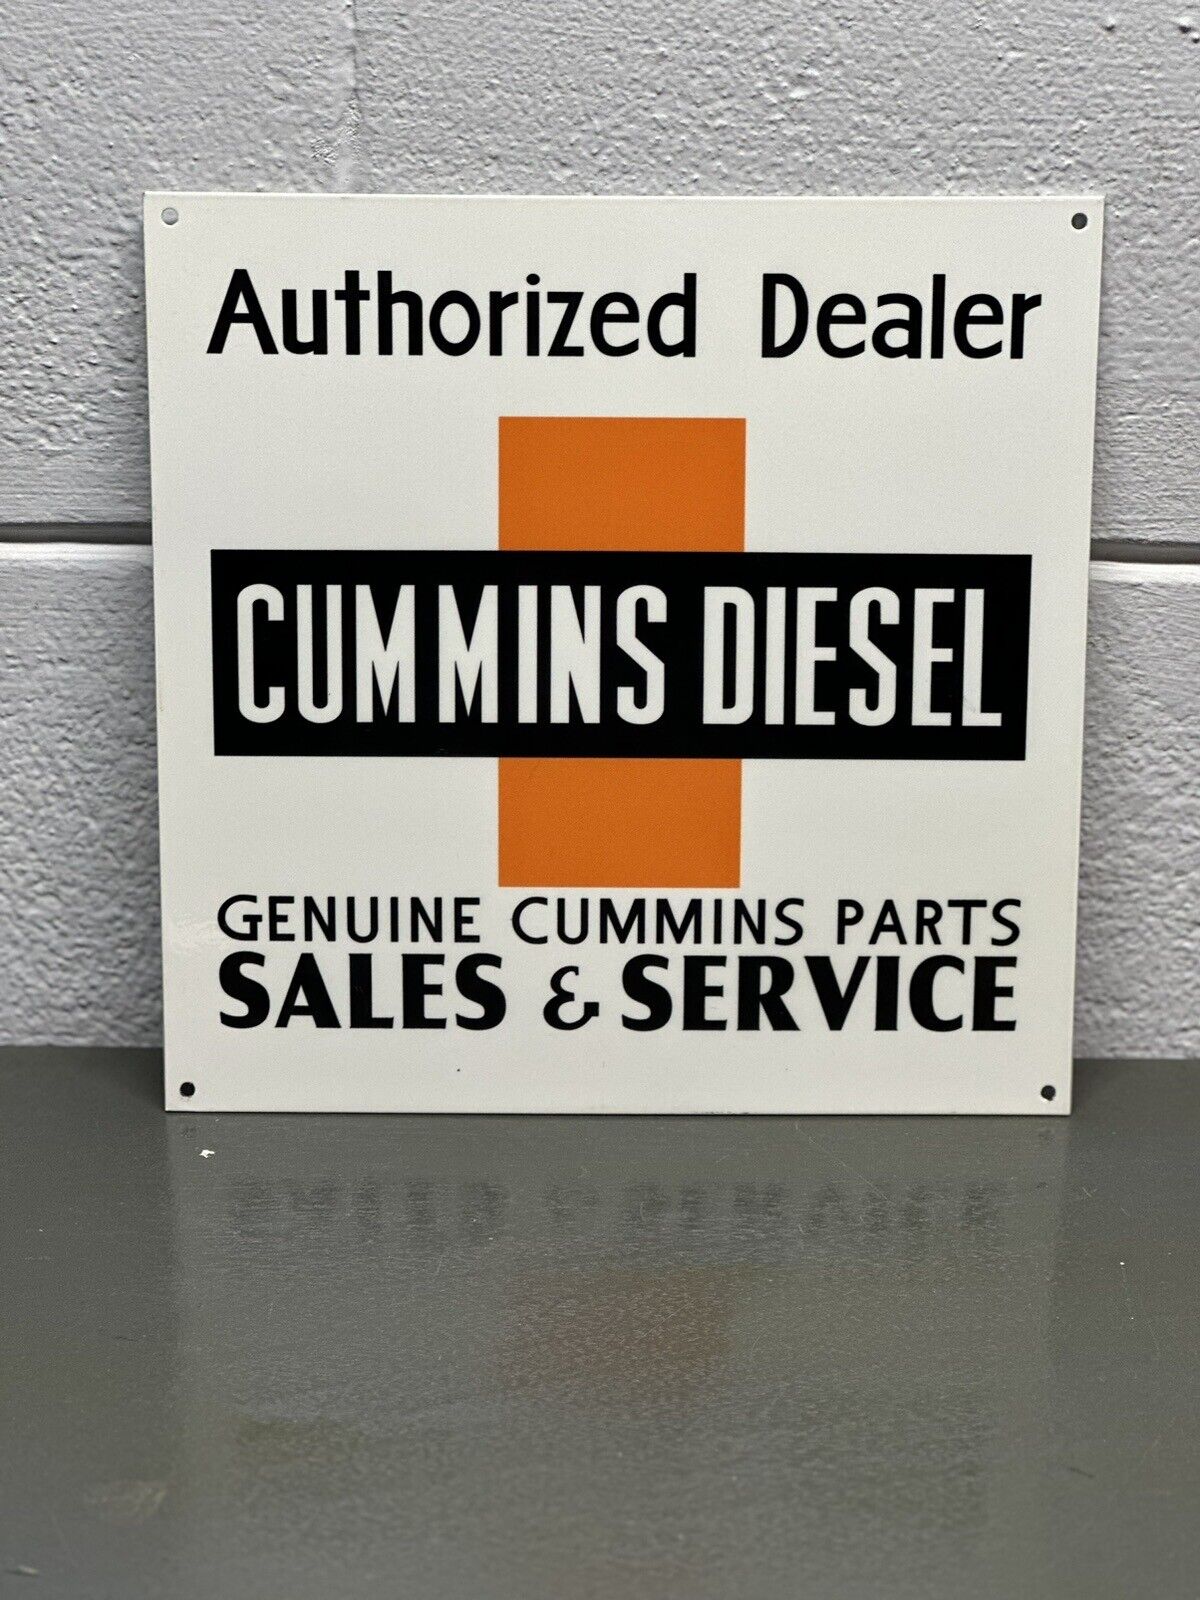 Cummins Diesel Metal Sign Sales Service Dealer Farm Gas Oil Parts Tractor Engine